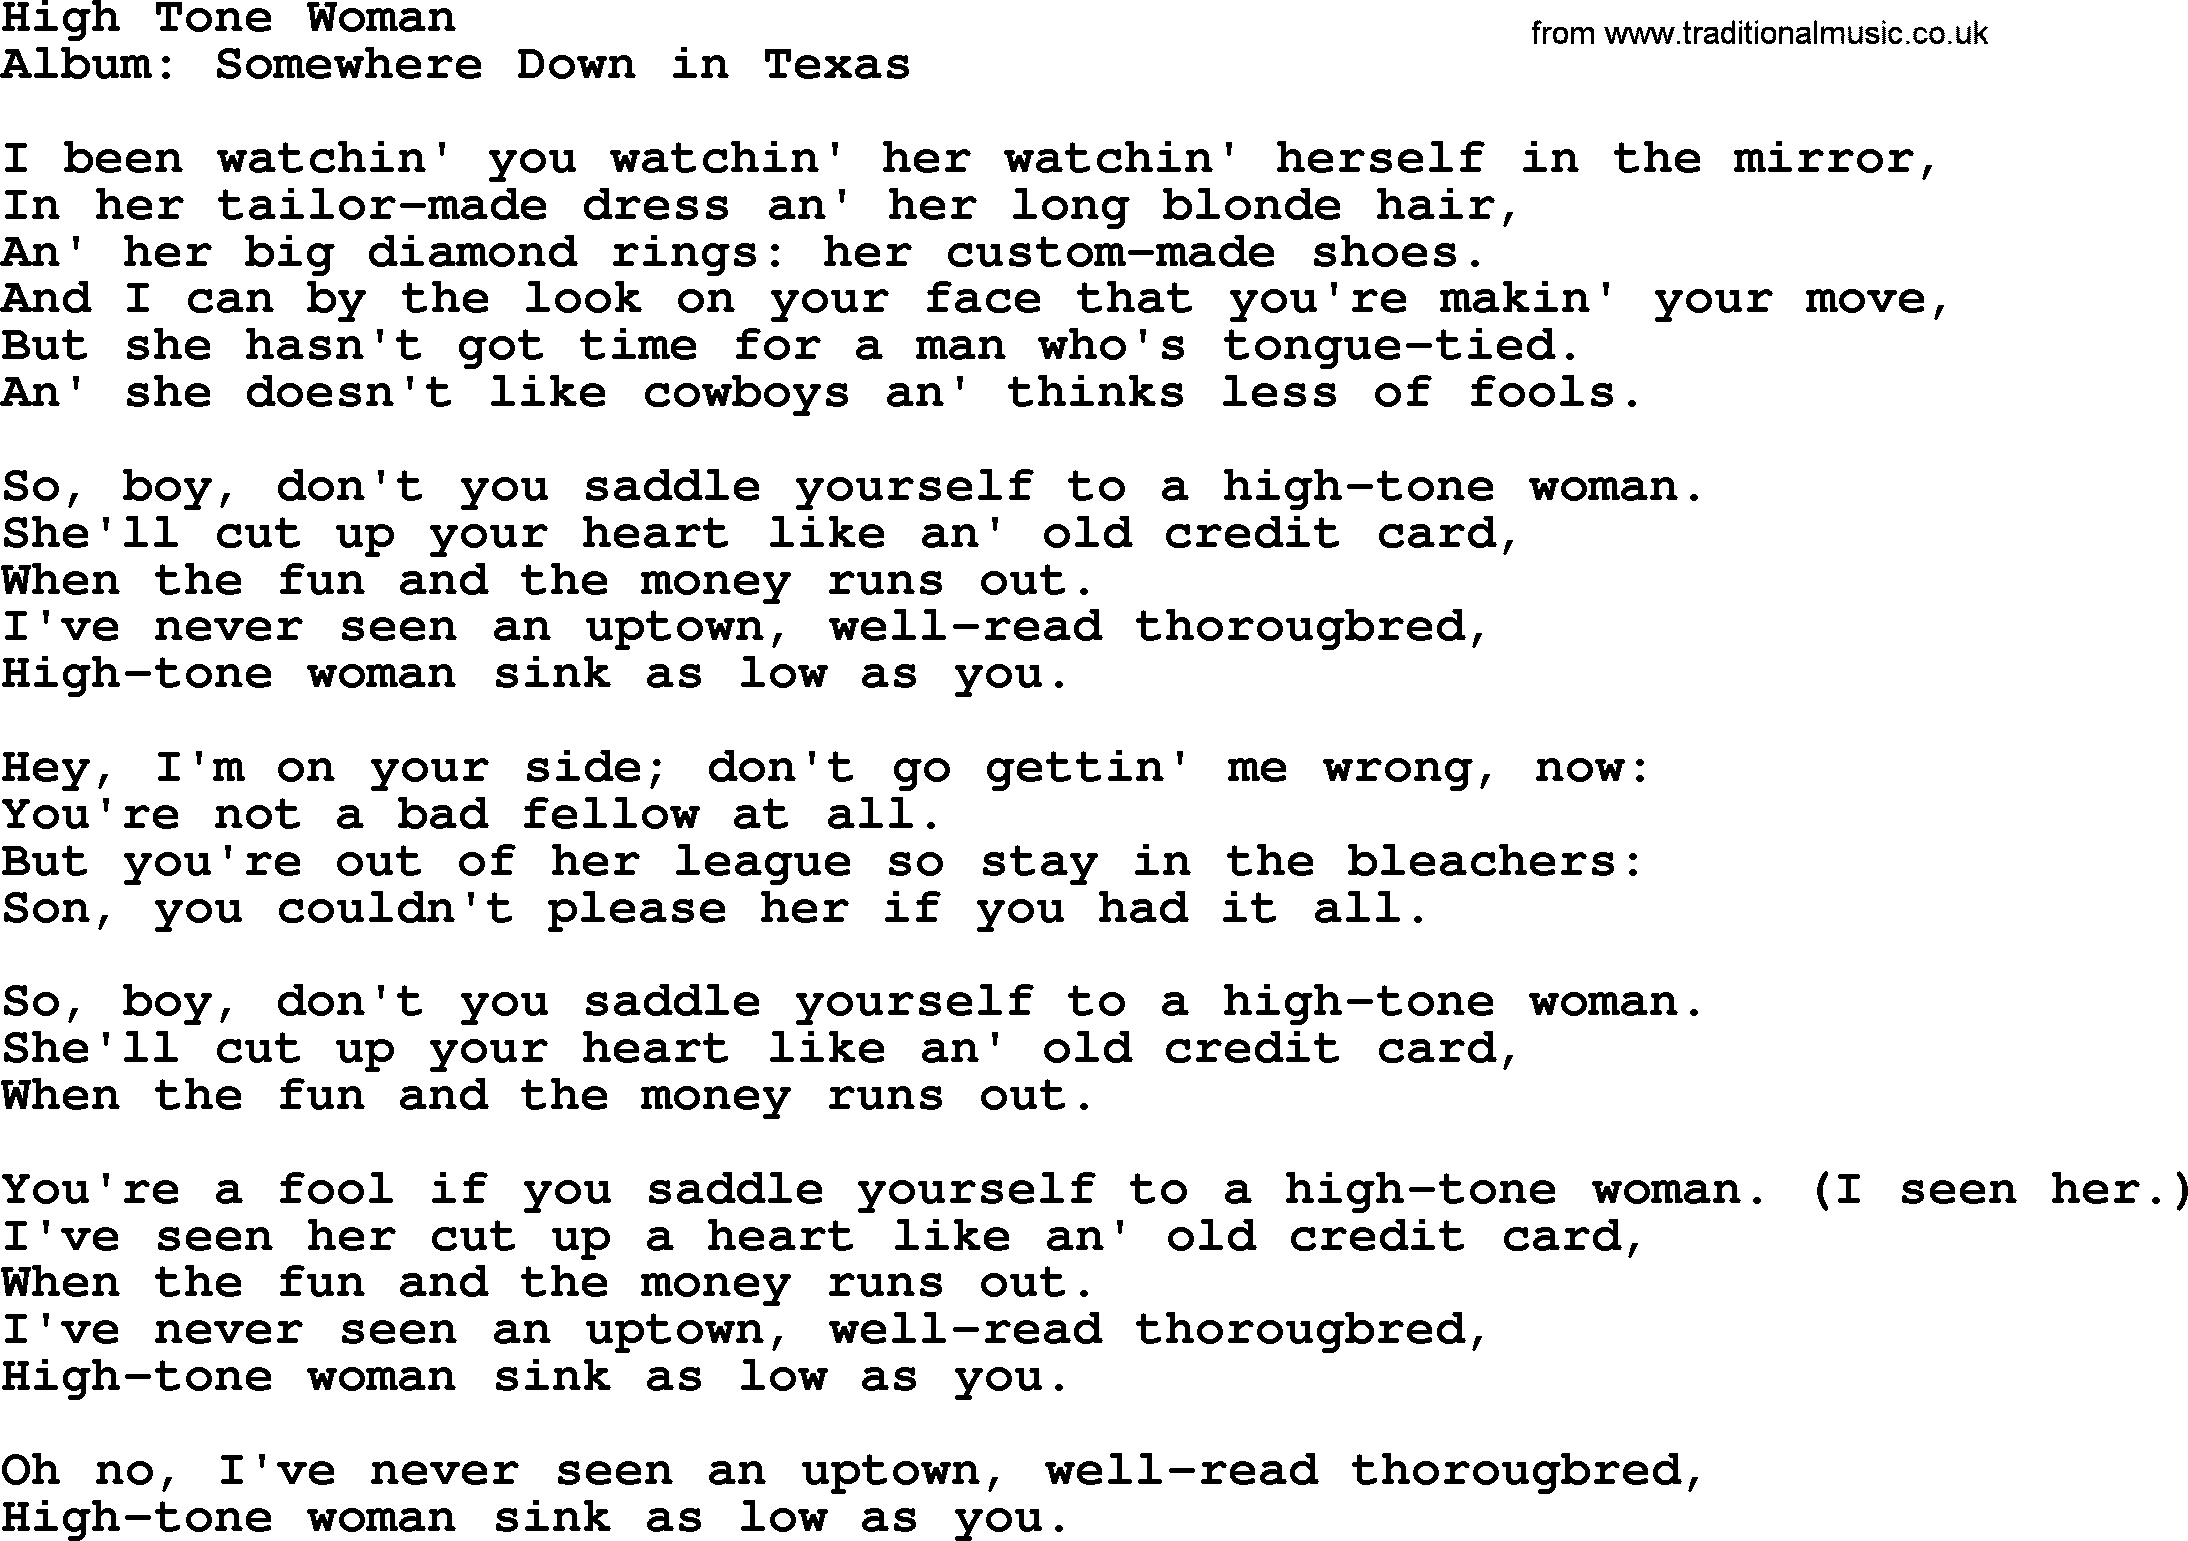 George Strait song: High Tone Woman, lyrics